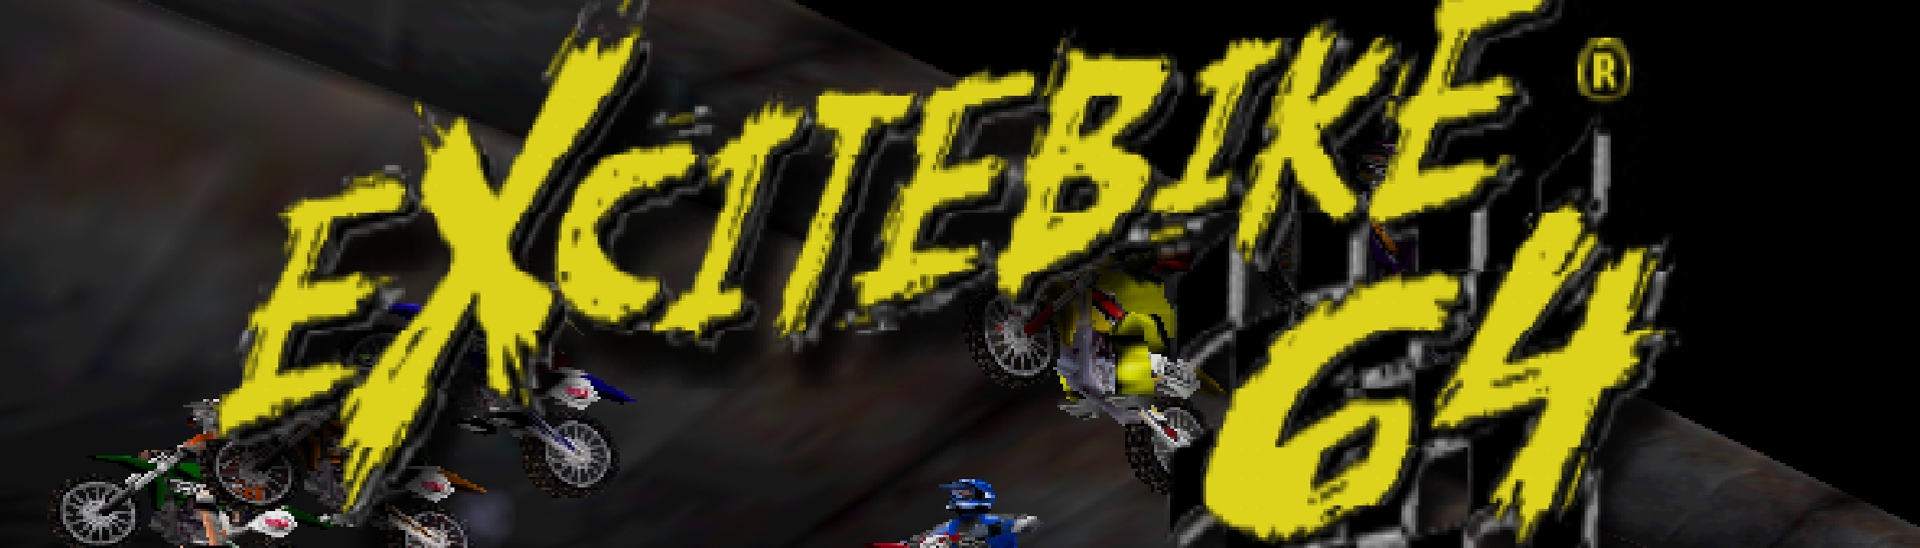 Banner Excitebike 64